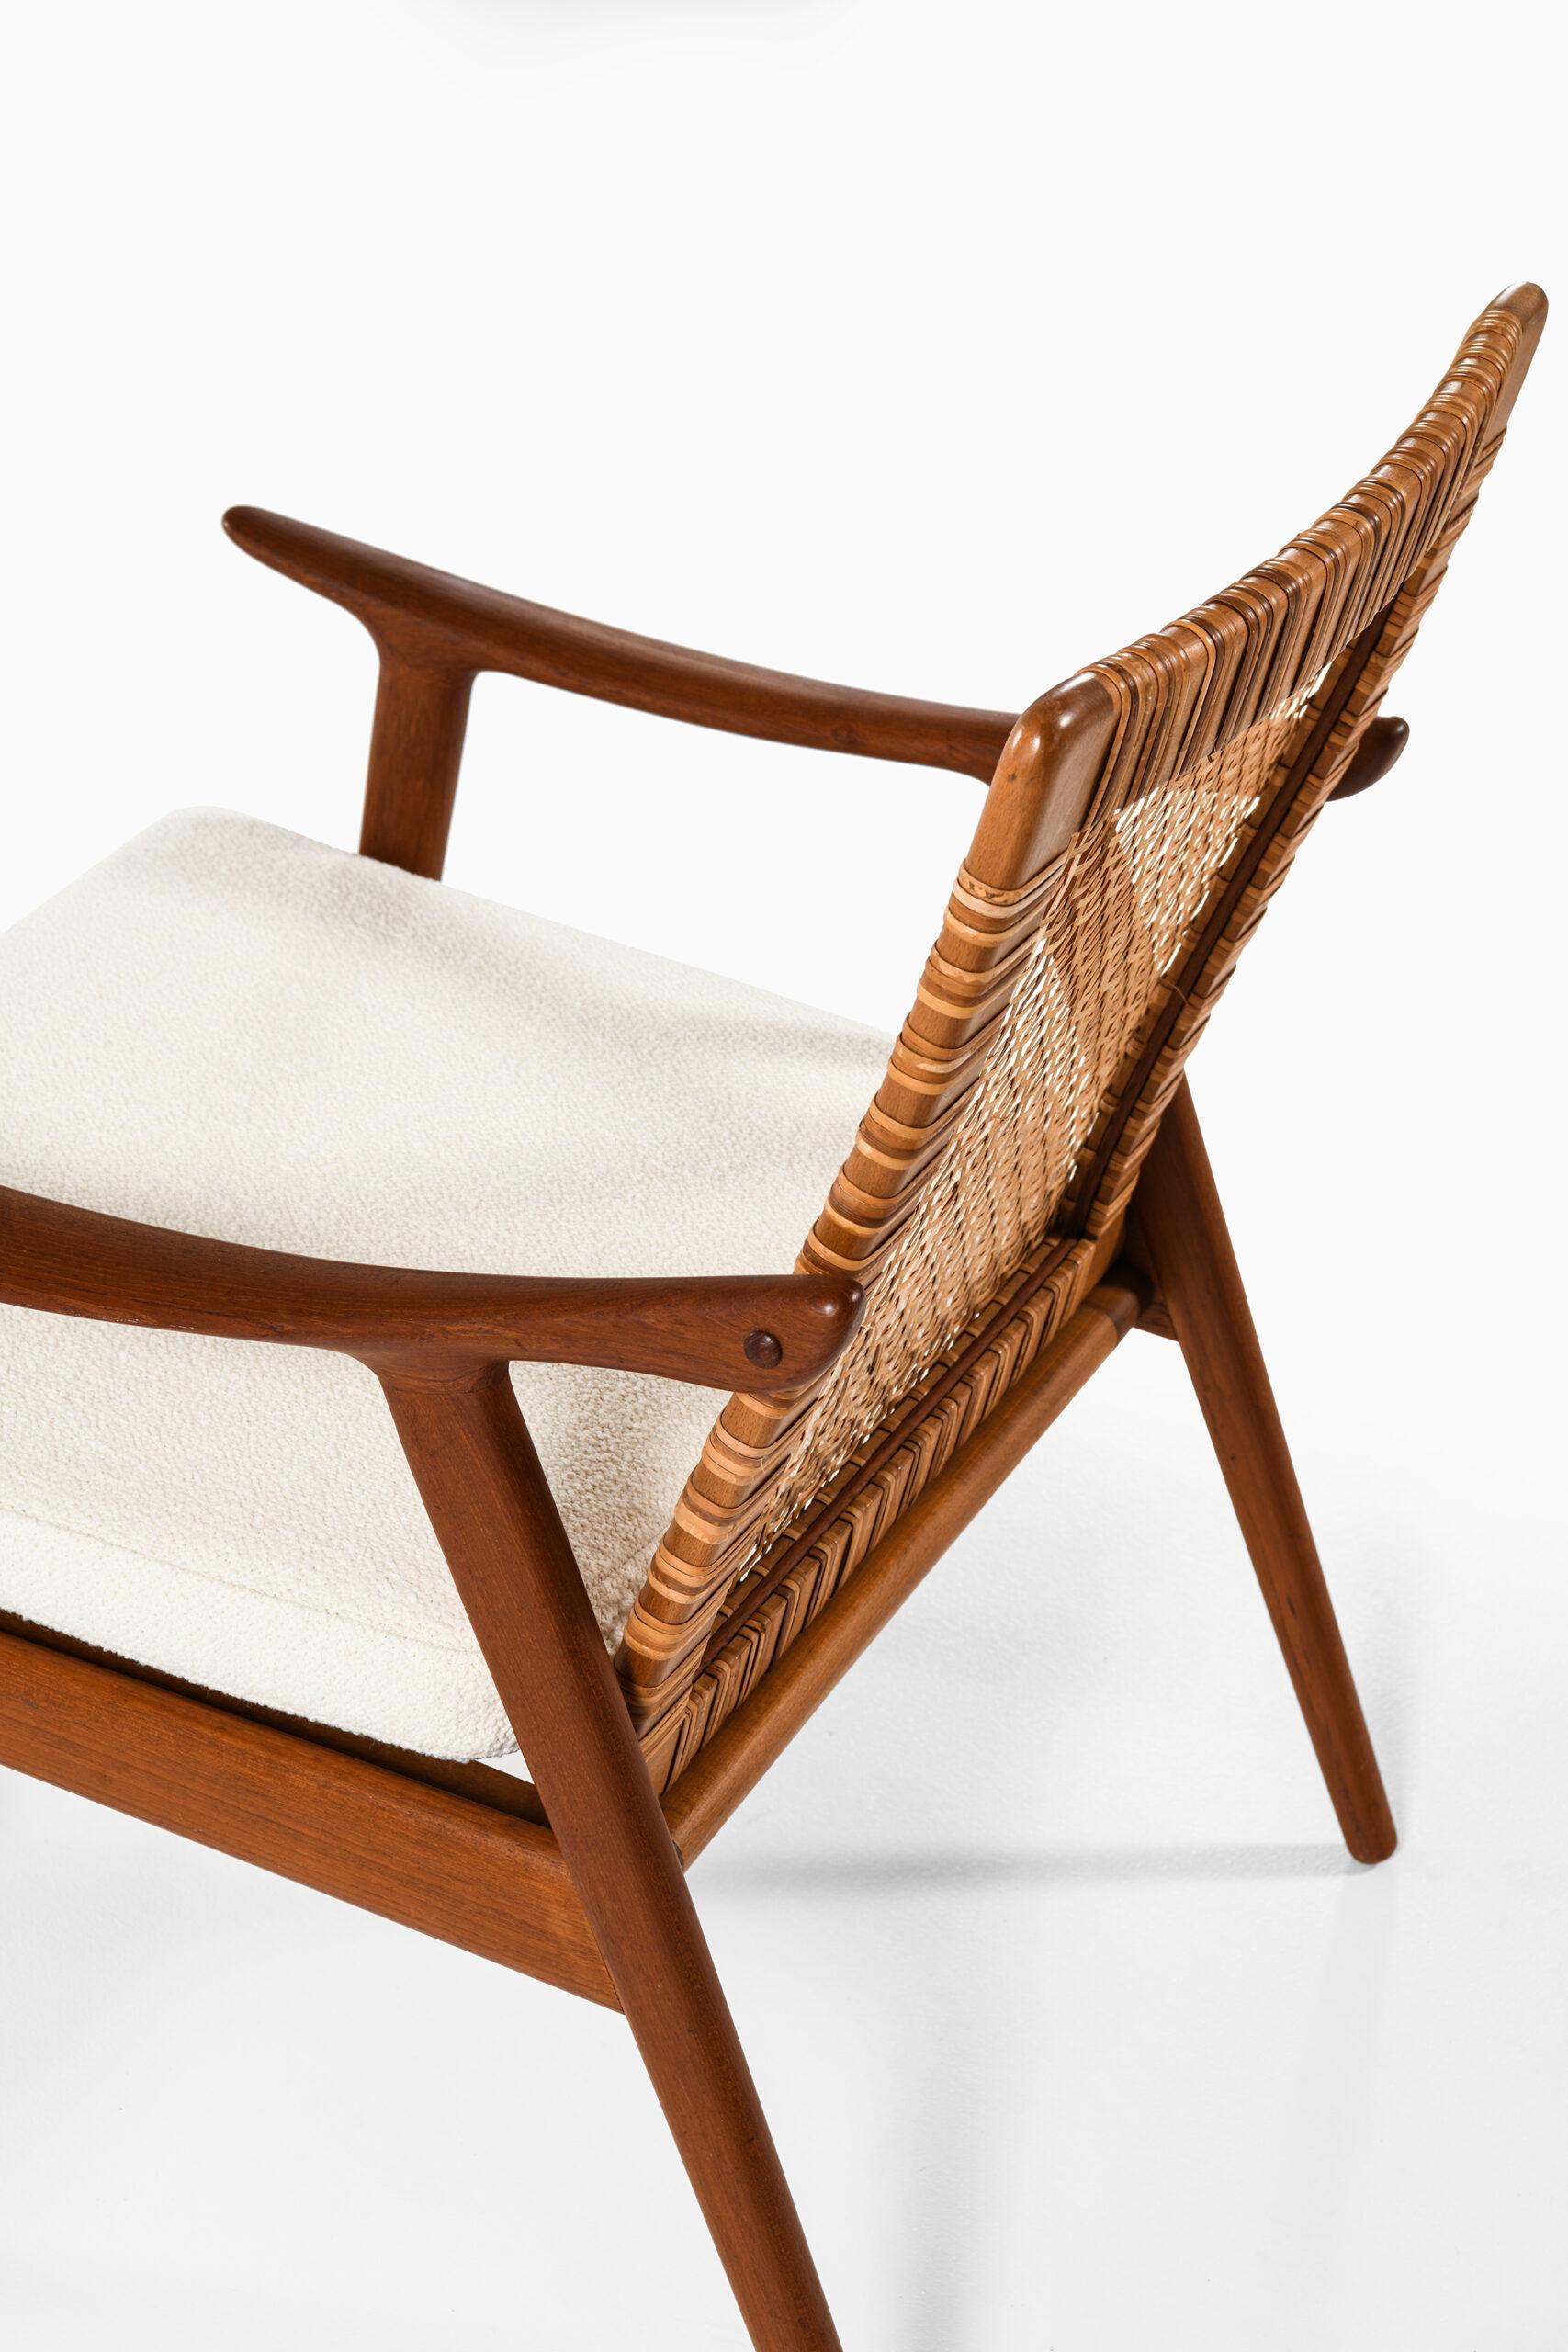 Mid-20th Century Fredrik Kayser Easy Chair Produced by Vatne Møbler